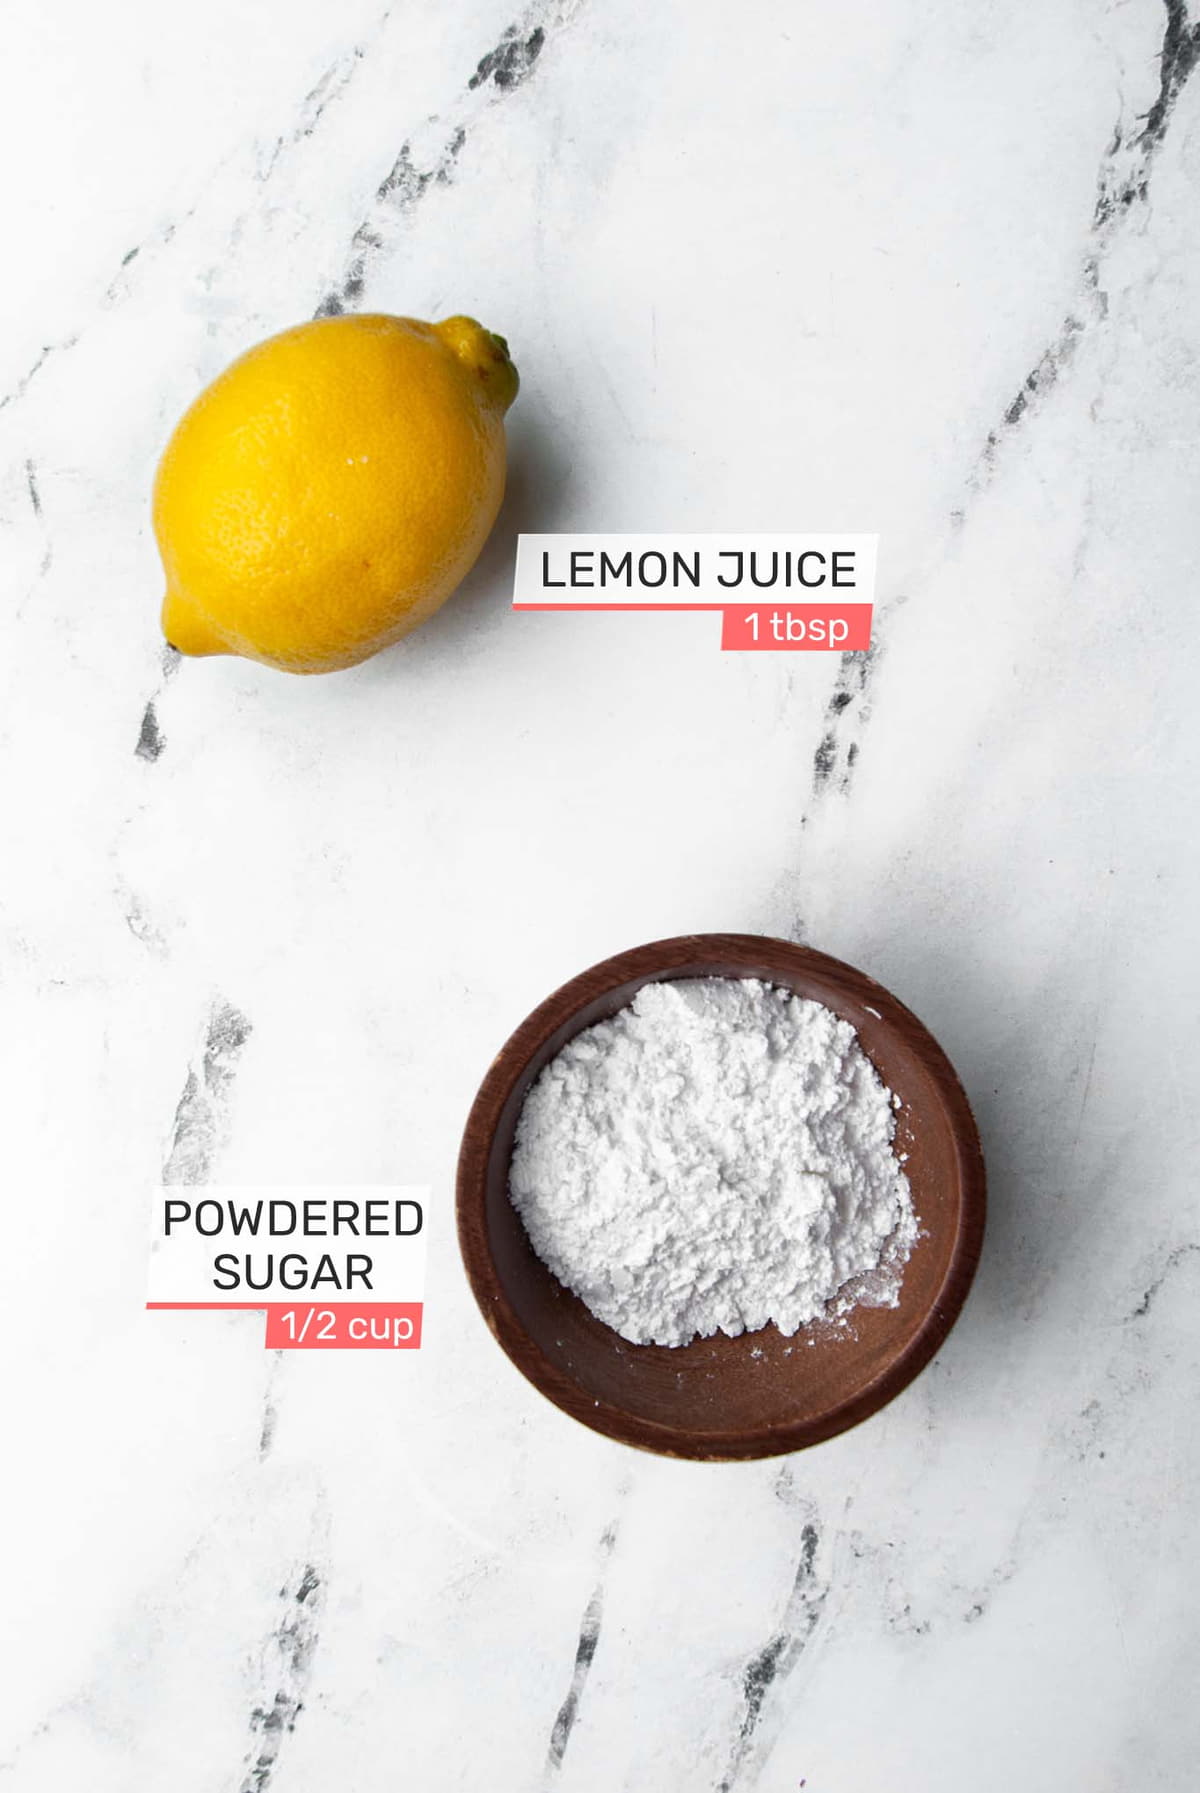 lemon juice and powdered sugar